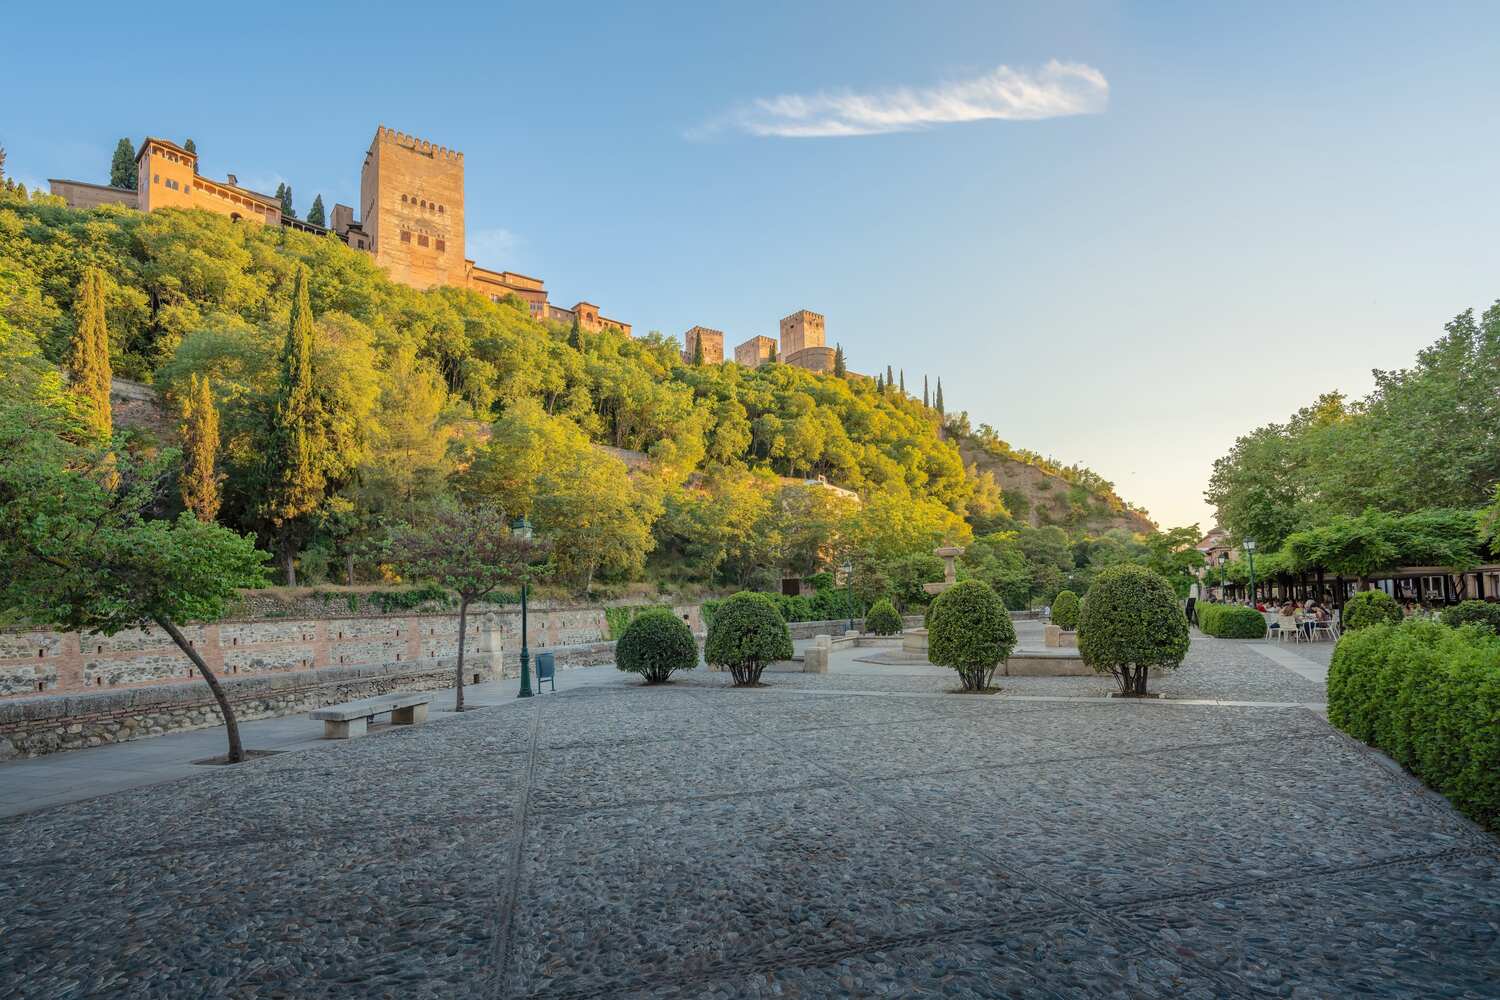 Paseo-de-los-tristes-in-Granada-with-views-over-the-Alhambra